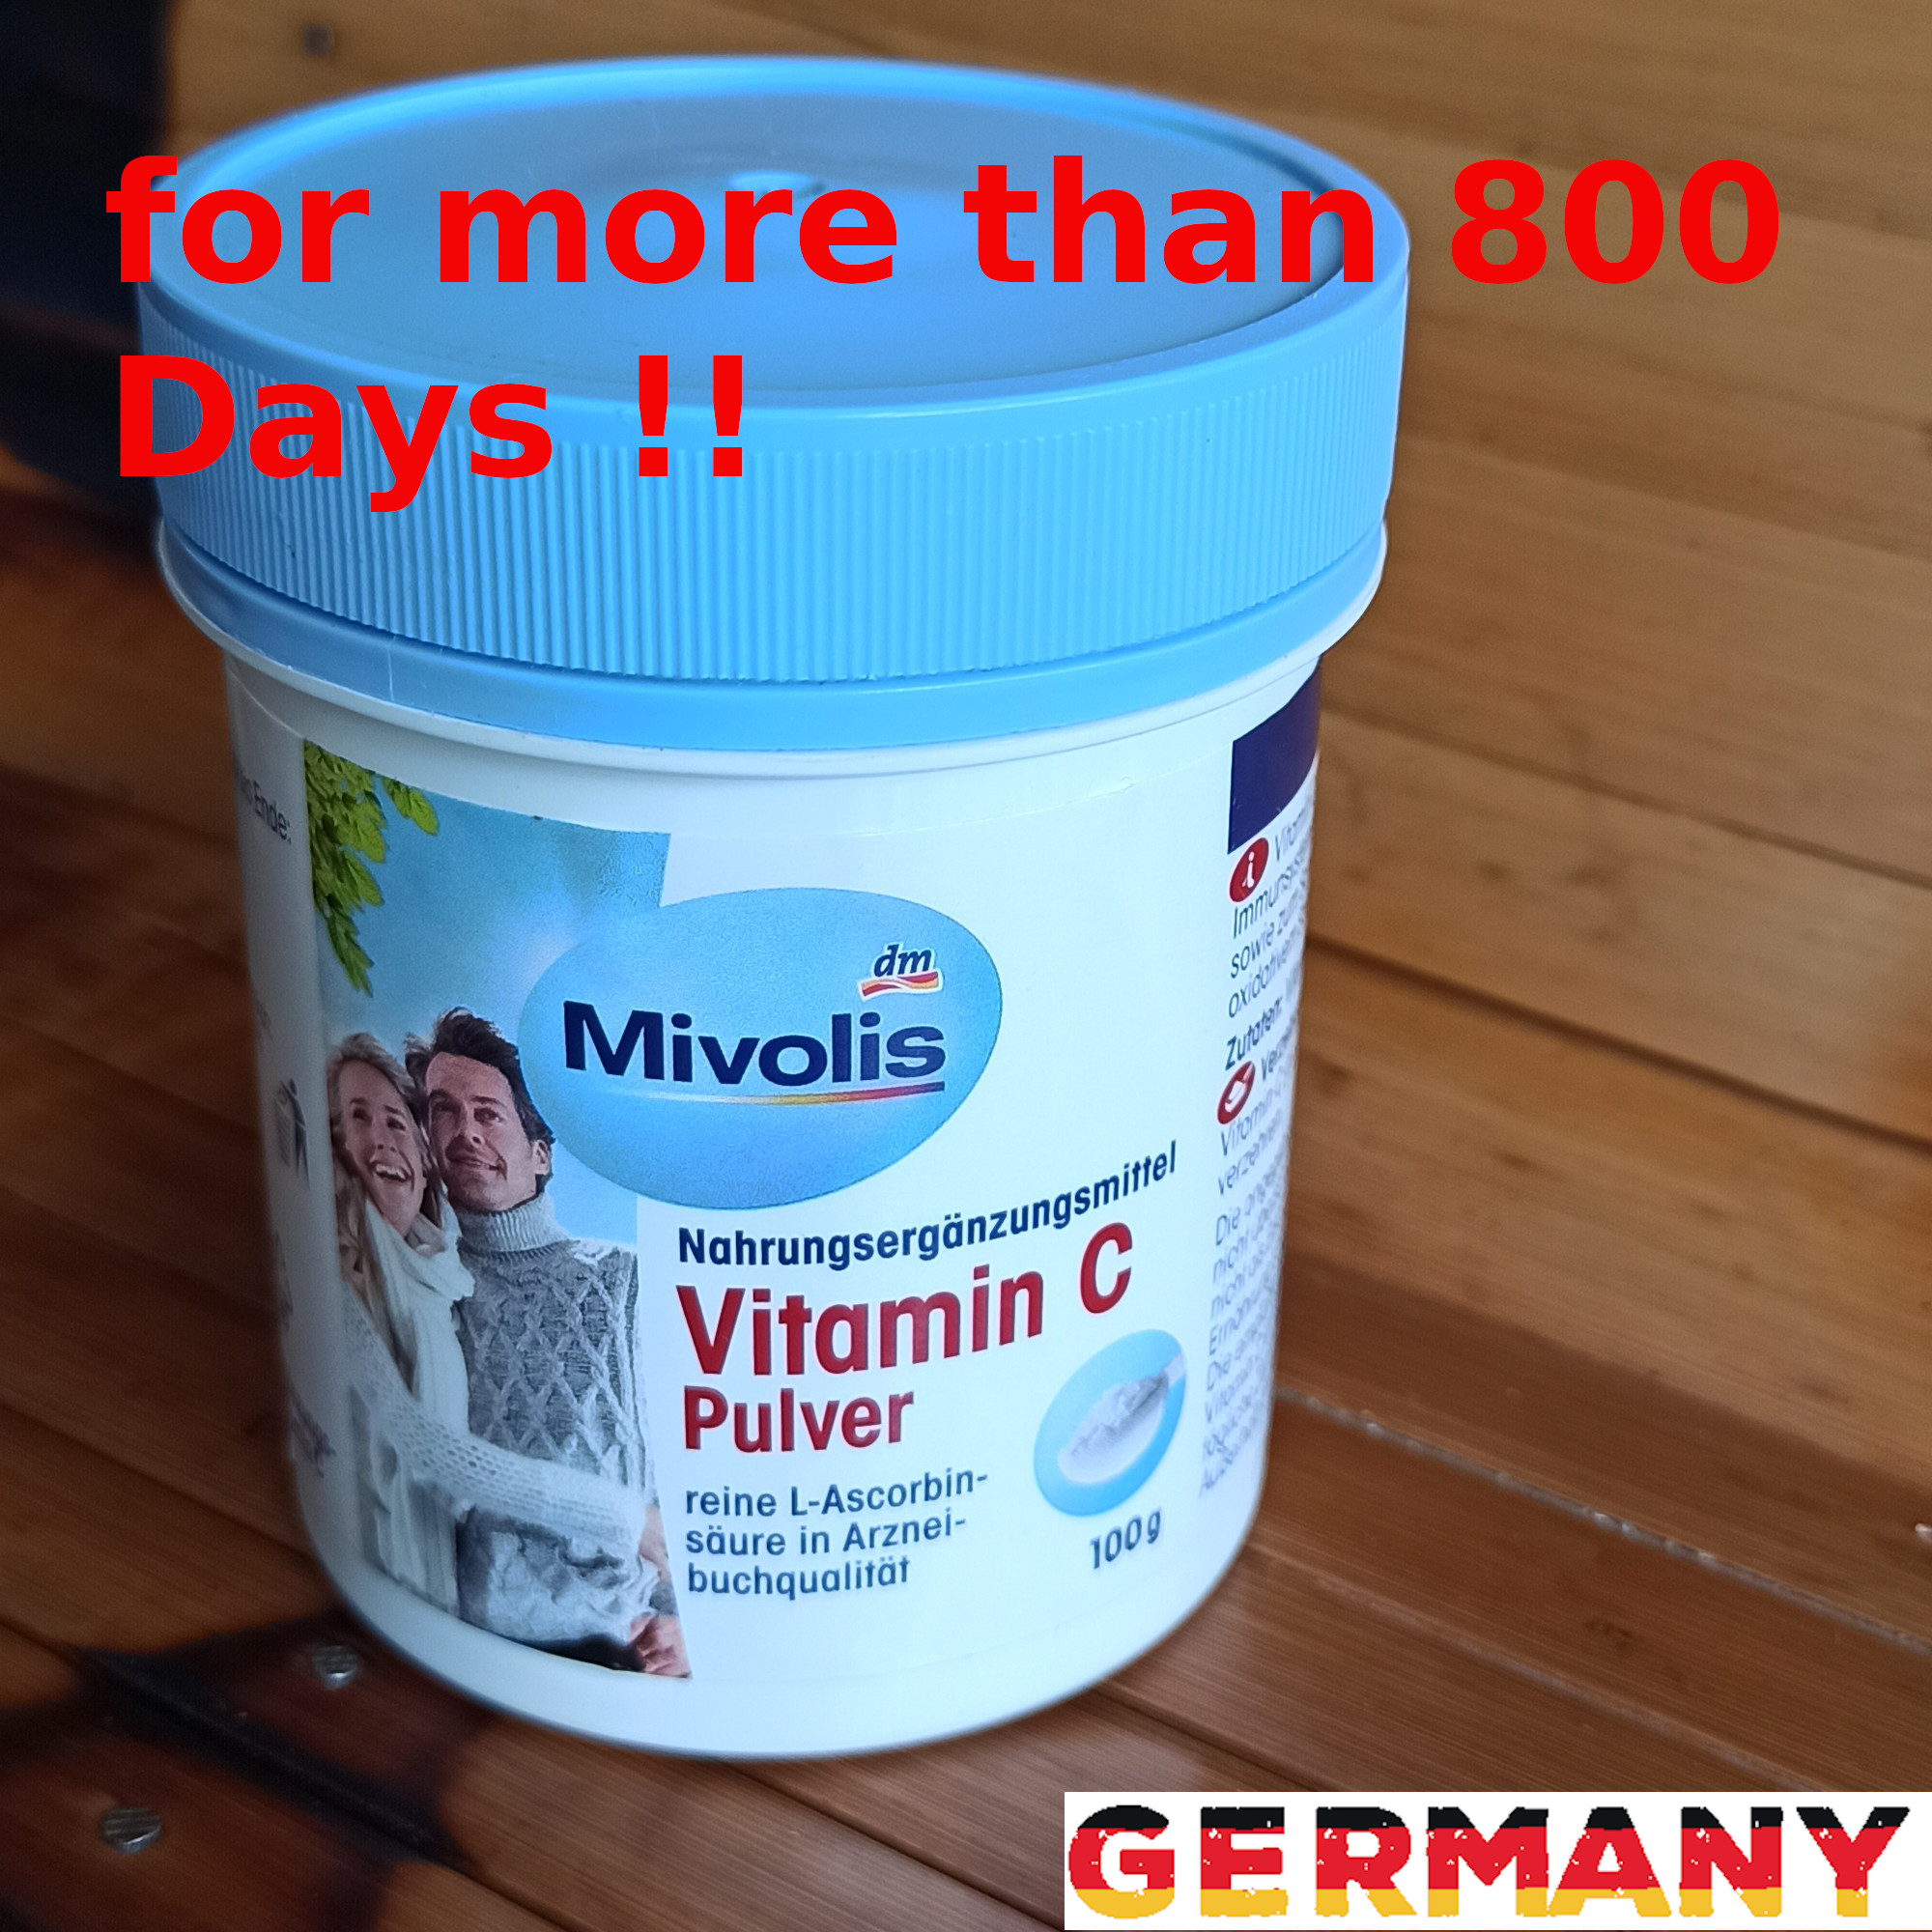 Mivolis Vitamin C Pulver Reviews